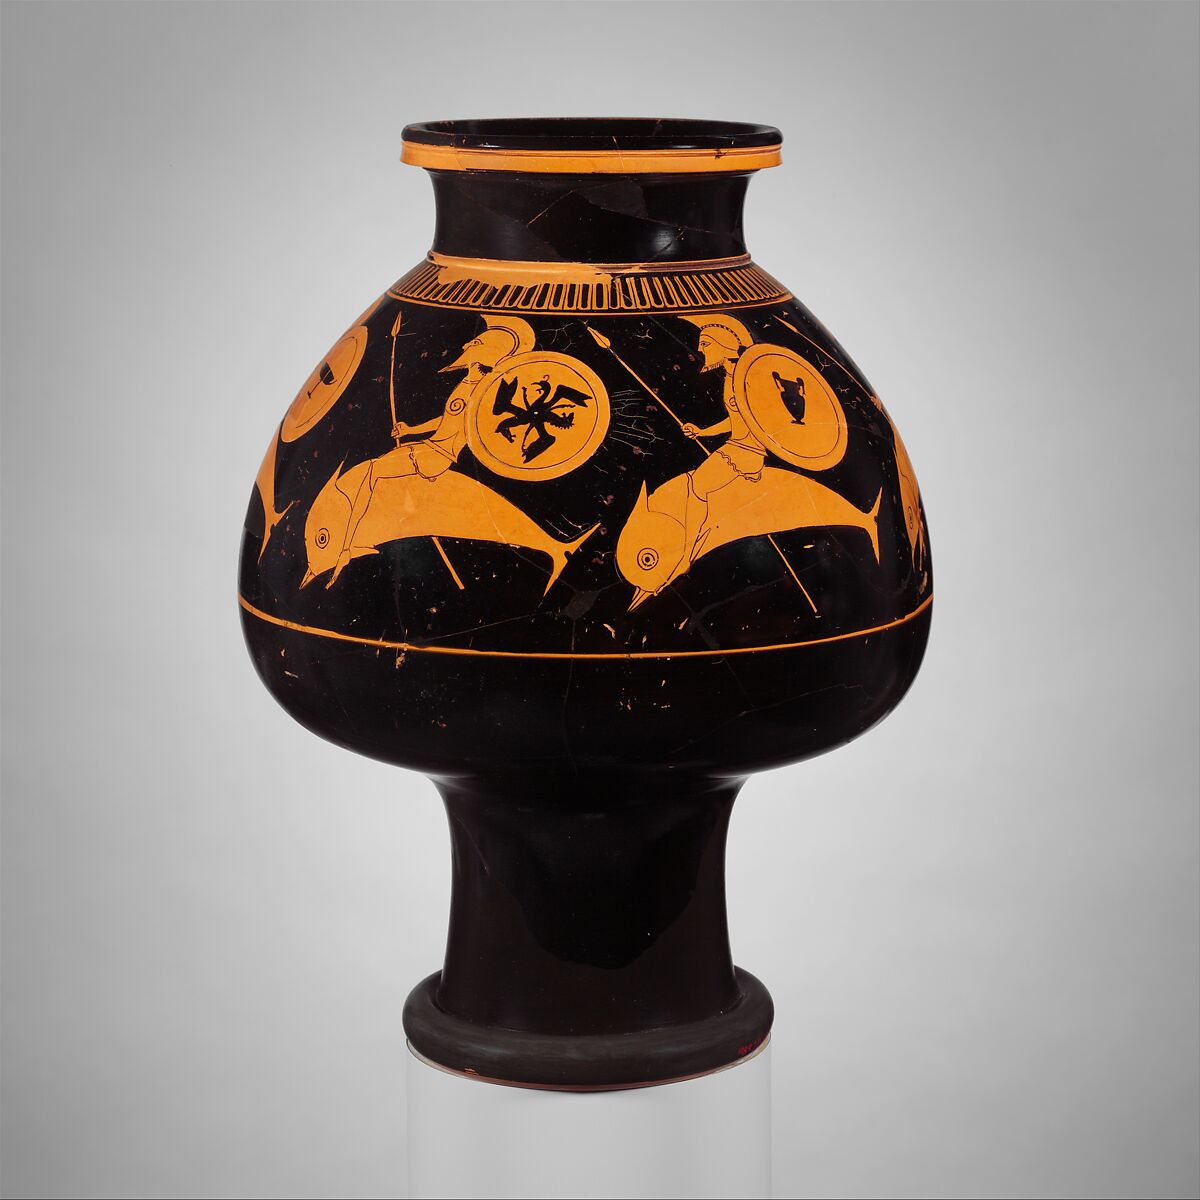 Terracotta psykter (vase for cooling wine), Attributed to Oltos, Terracotta, Greek, Attic 